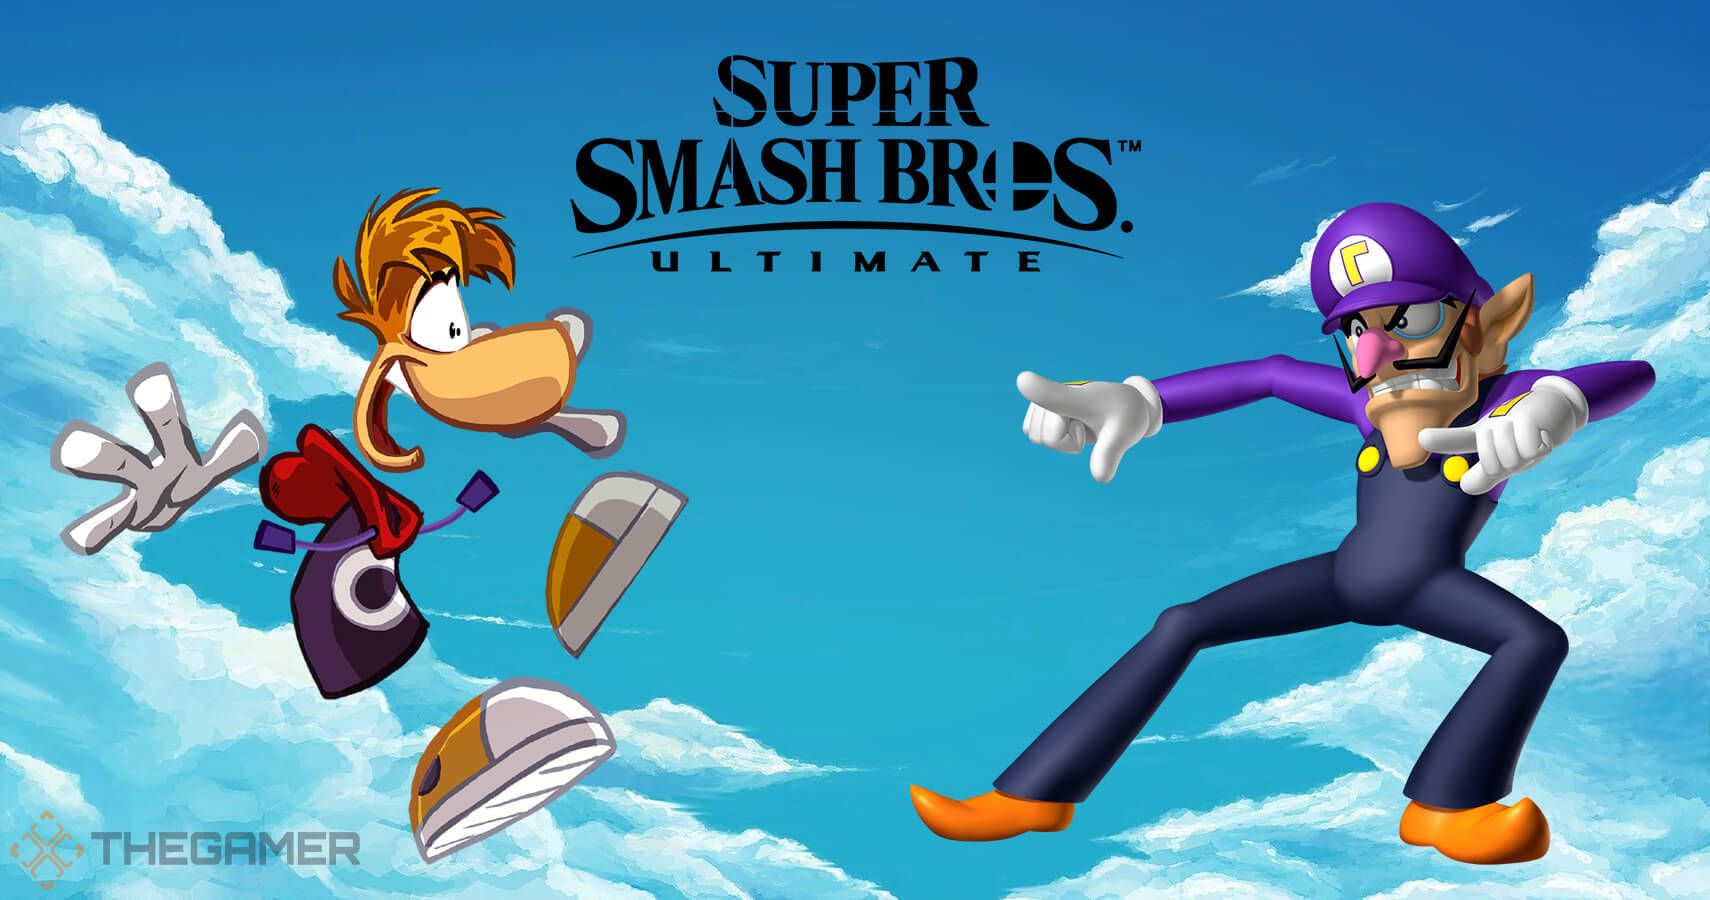 Listen Up Nintendo! Smash Fans Want Waluigi & Rayman To Join The Battle